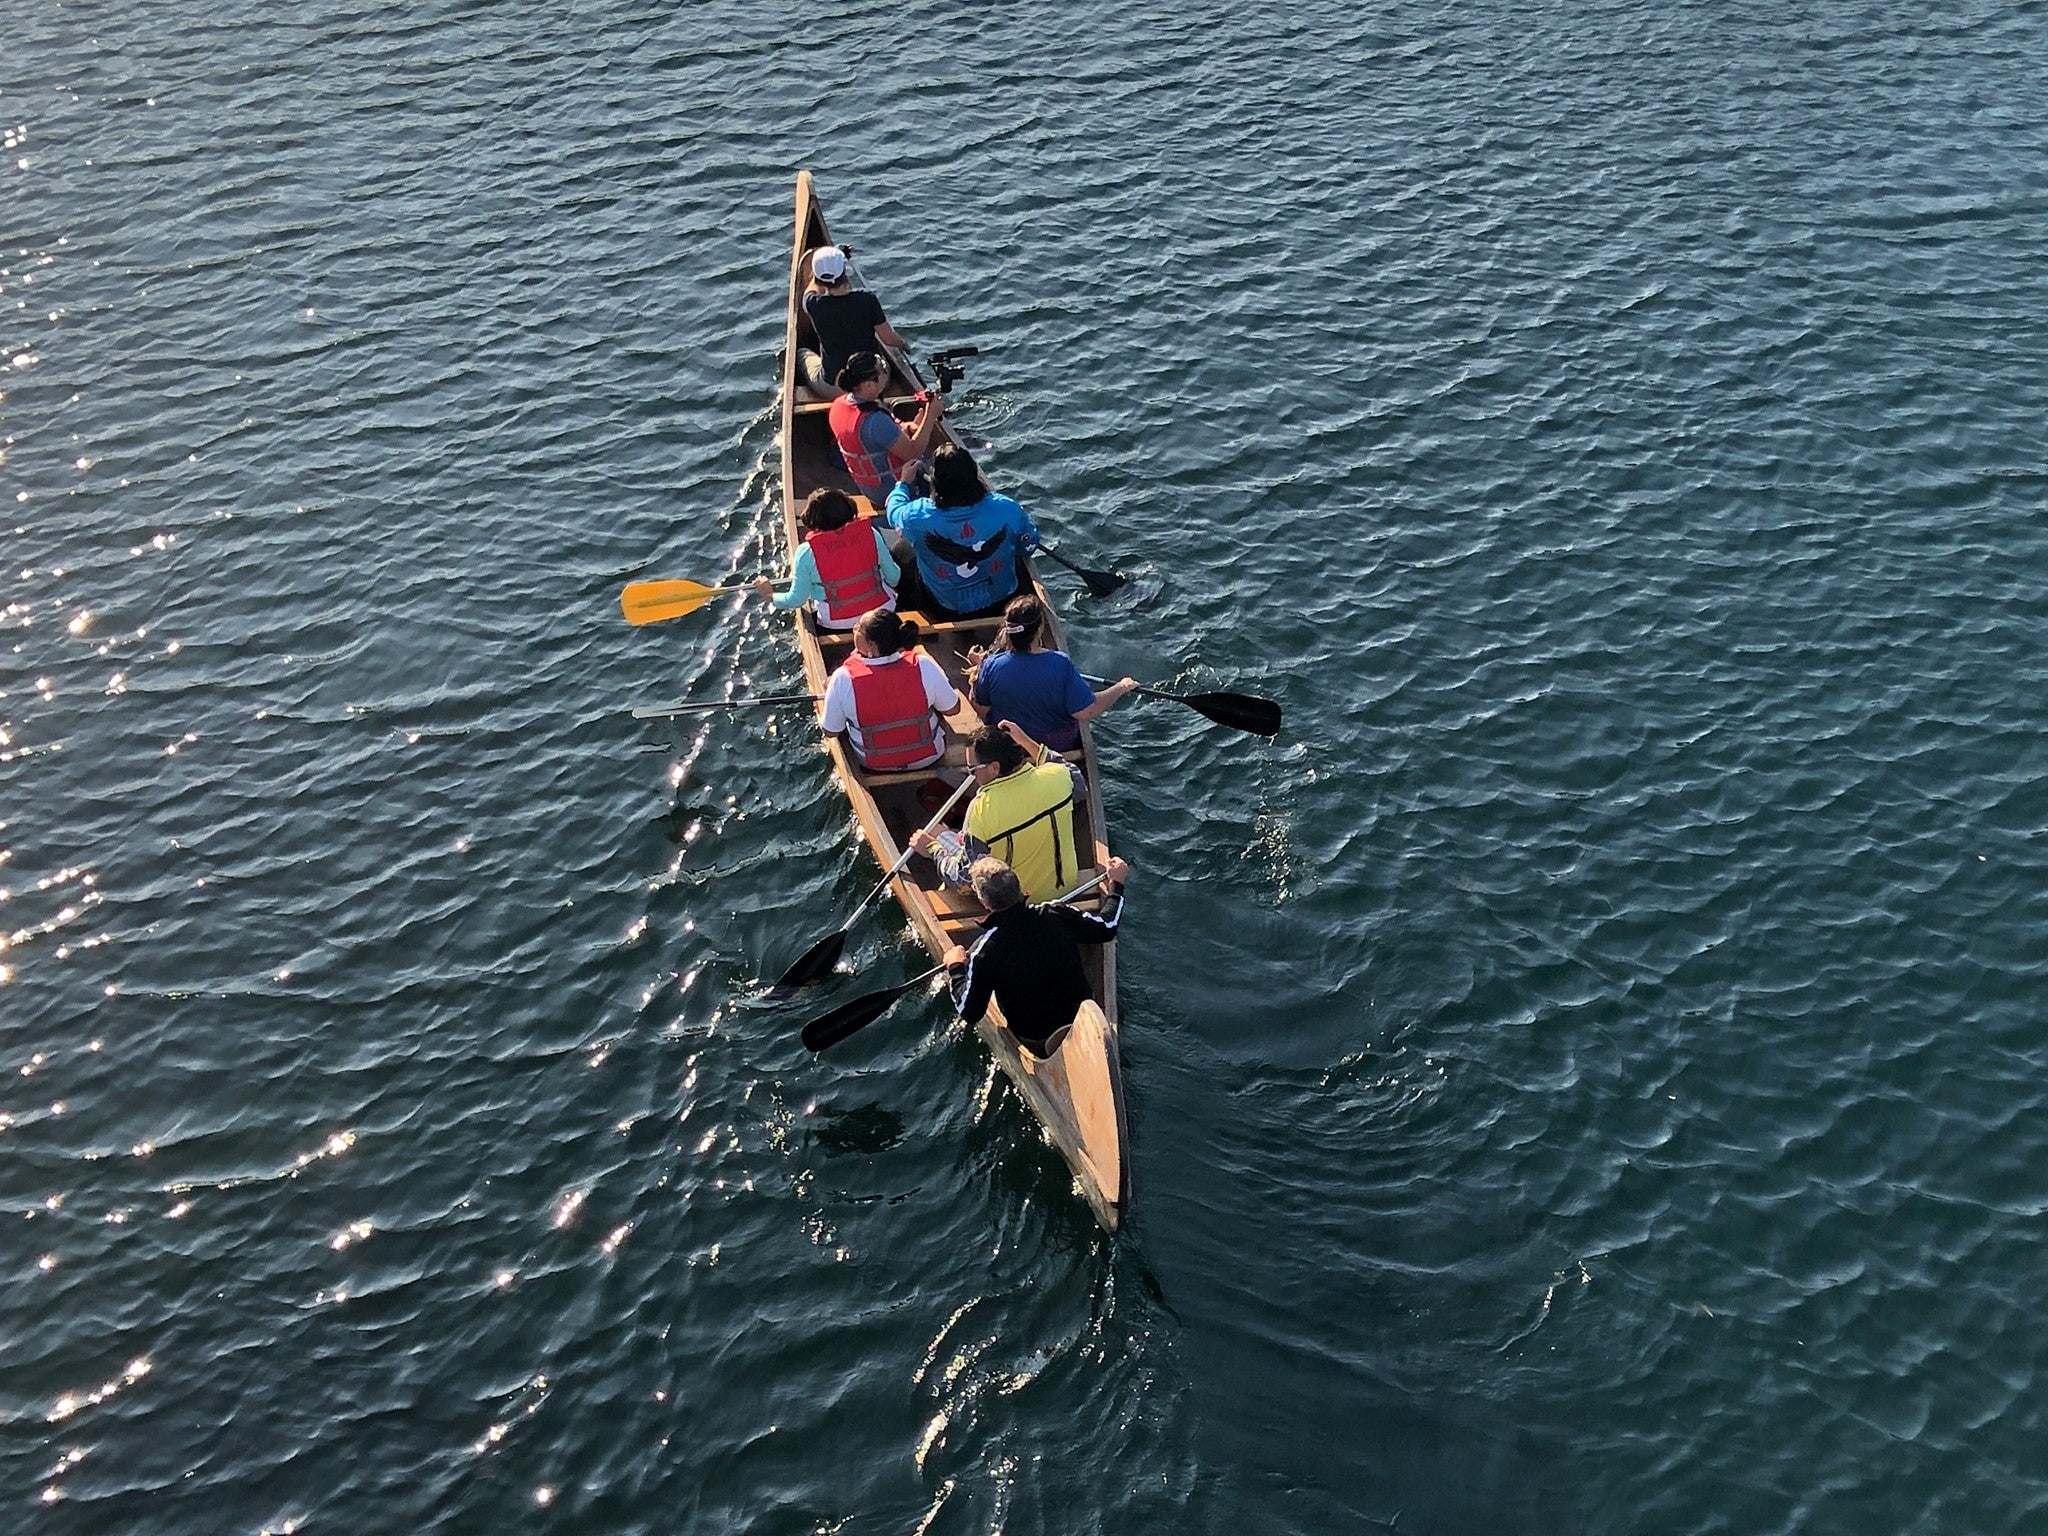 Eight people in a canoe on open water.